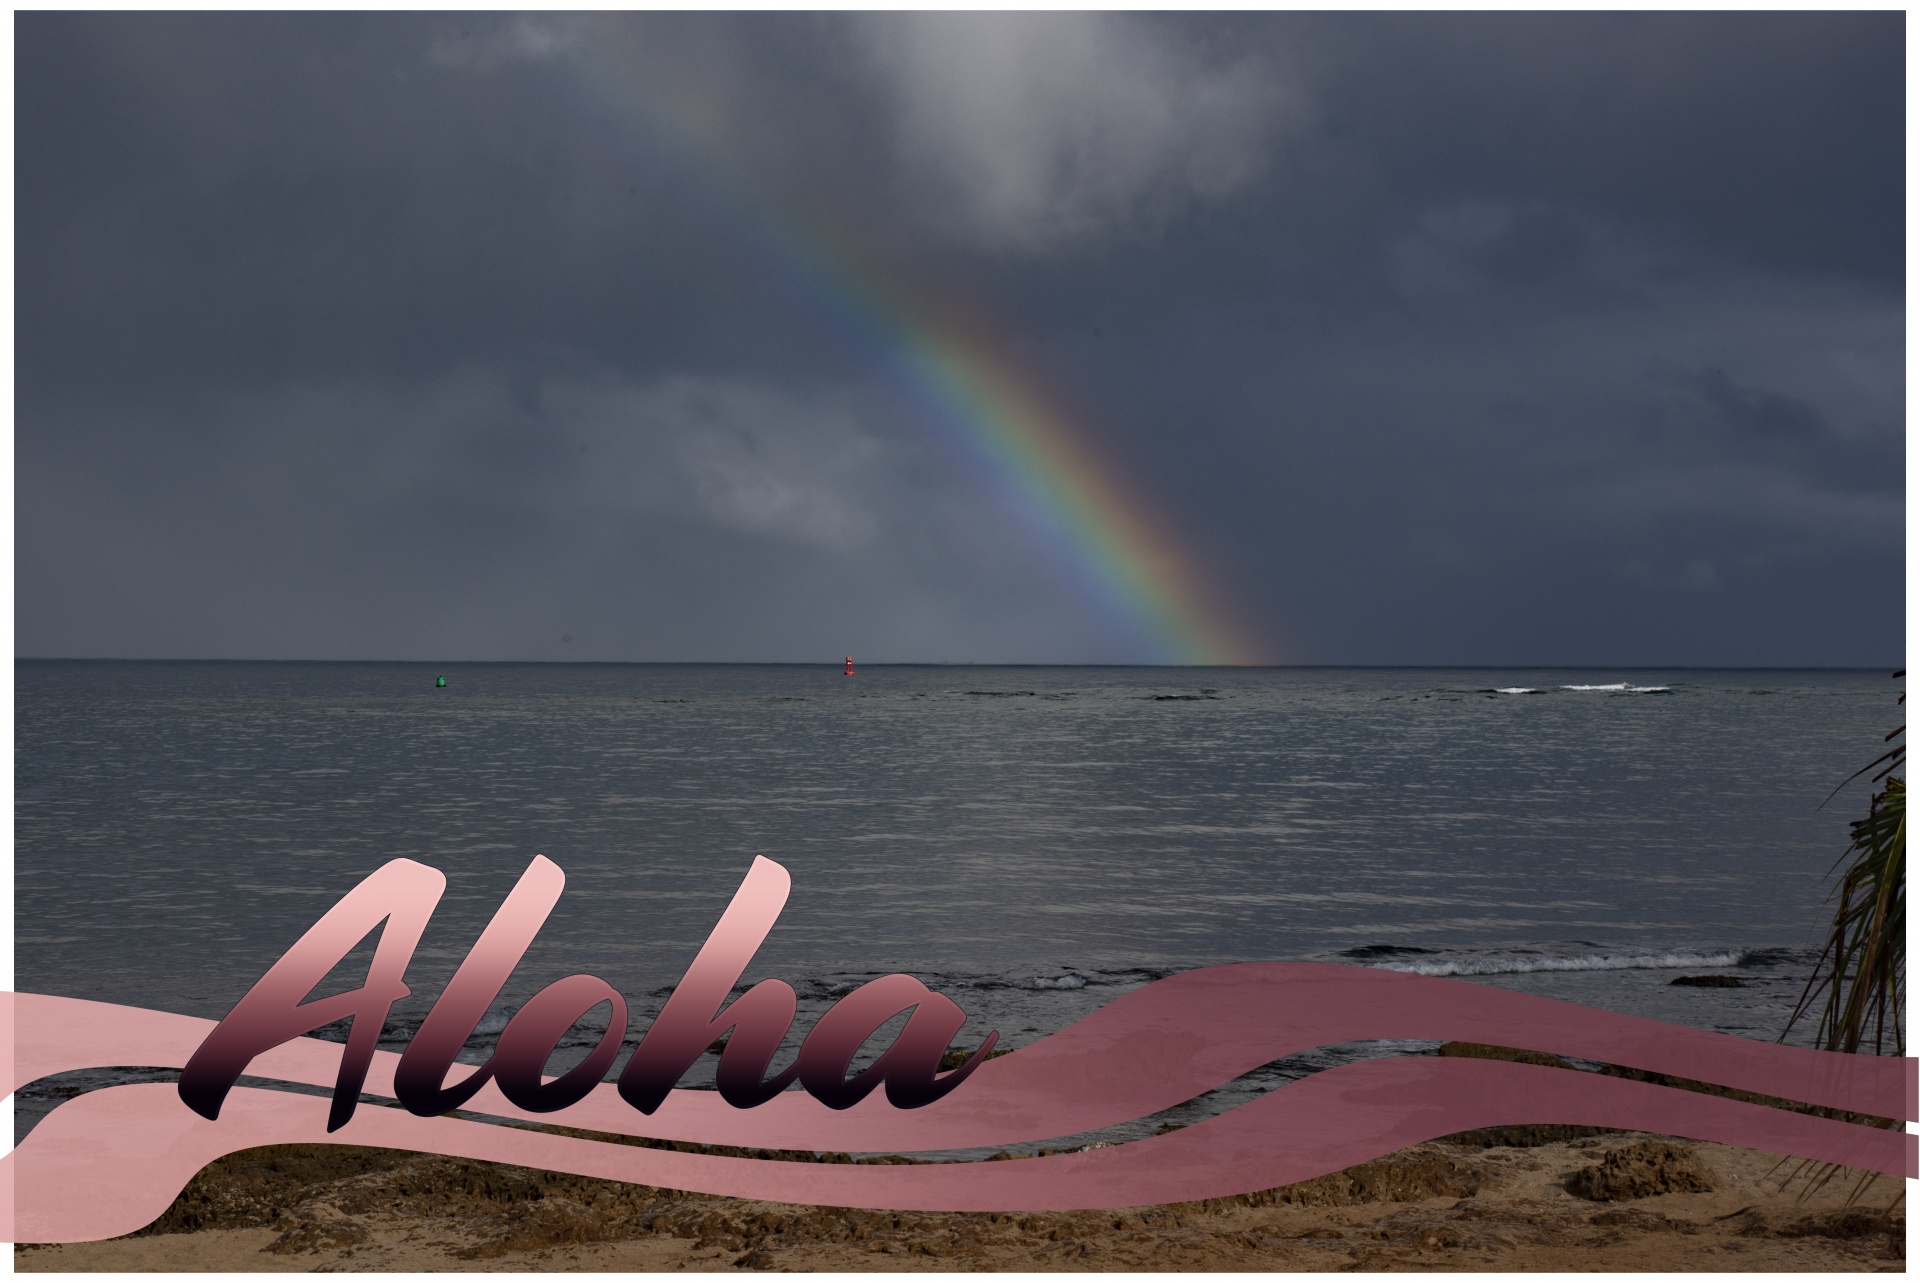 Aloha Hawaii Travel Poster - Postcard from Maui